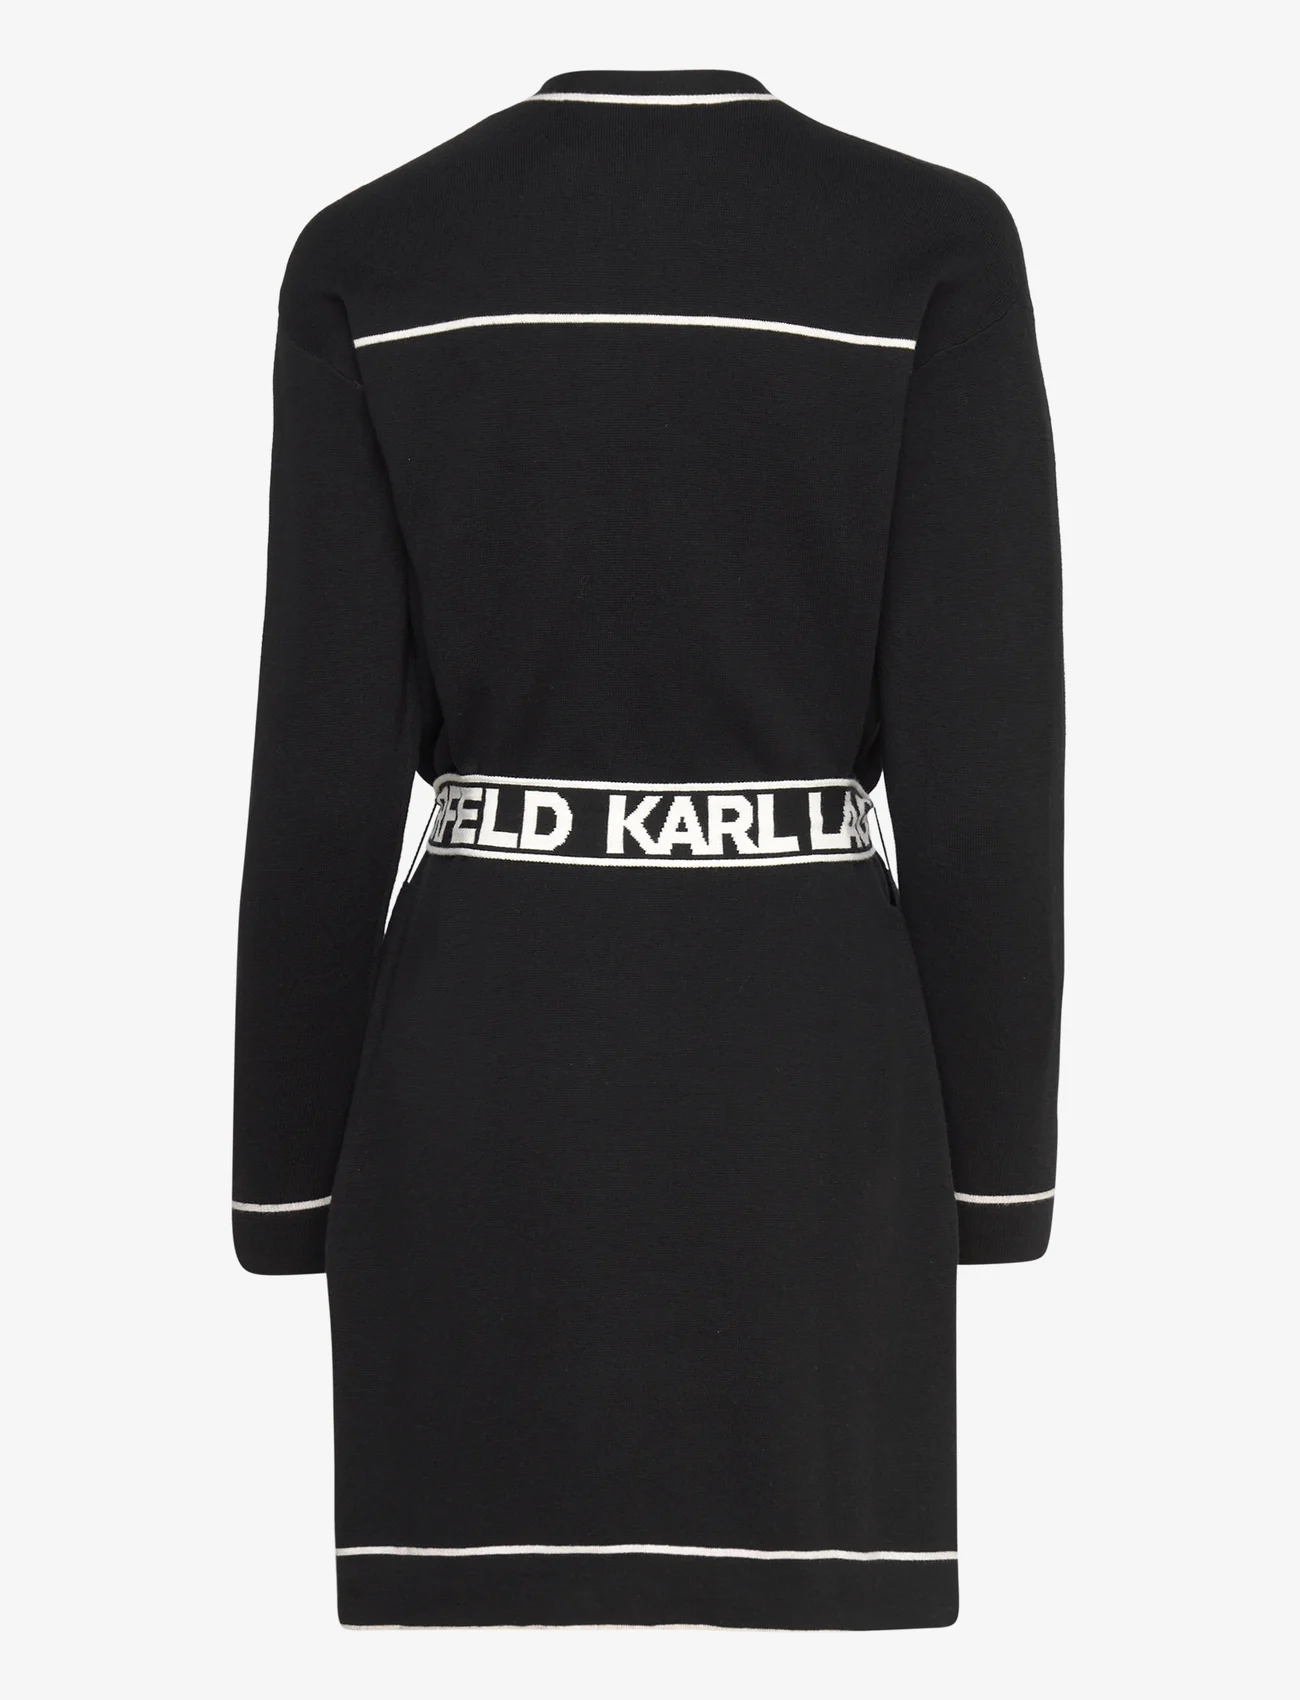 Karl Lagerfeld - branded belted cardigan - cardigans - black/white - 1